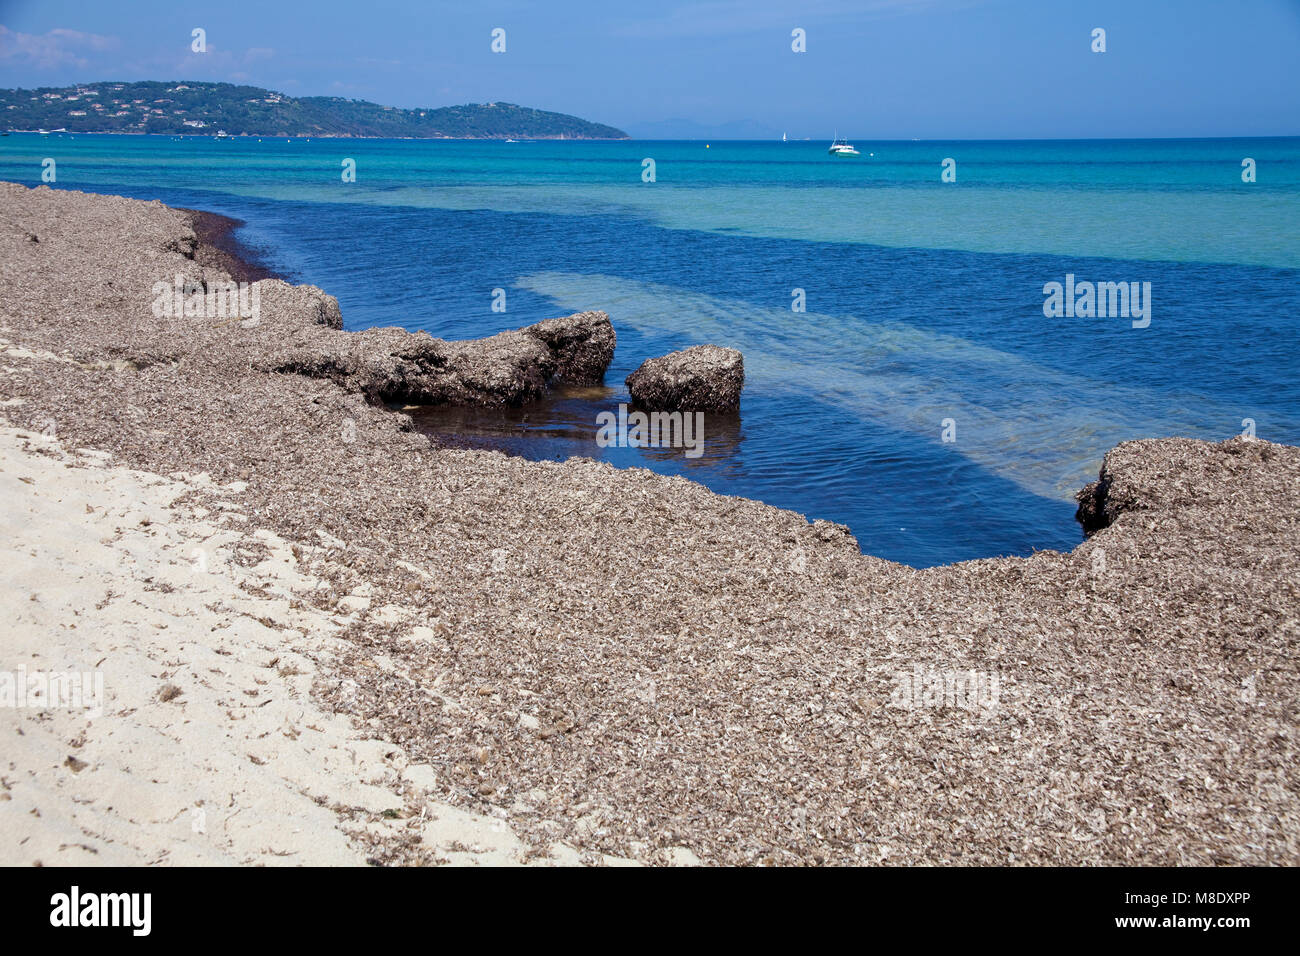 Washed ashore algae at Pampelonne beach, popular beach at Saint-Tropez, french riviera, South France, Cote d'Azur, France, Europe, Mediterranean sea Stock Photo